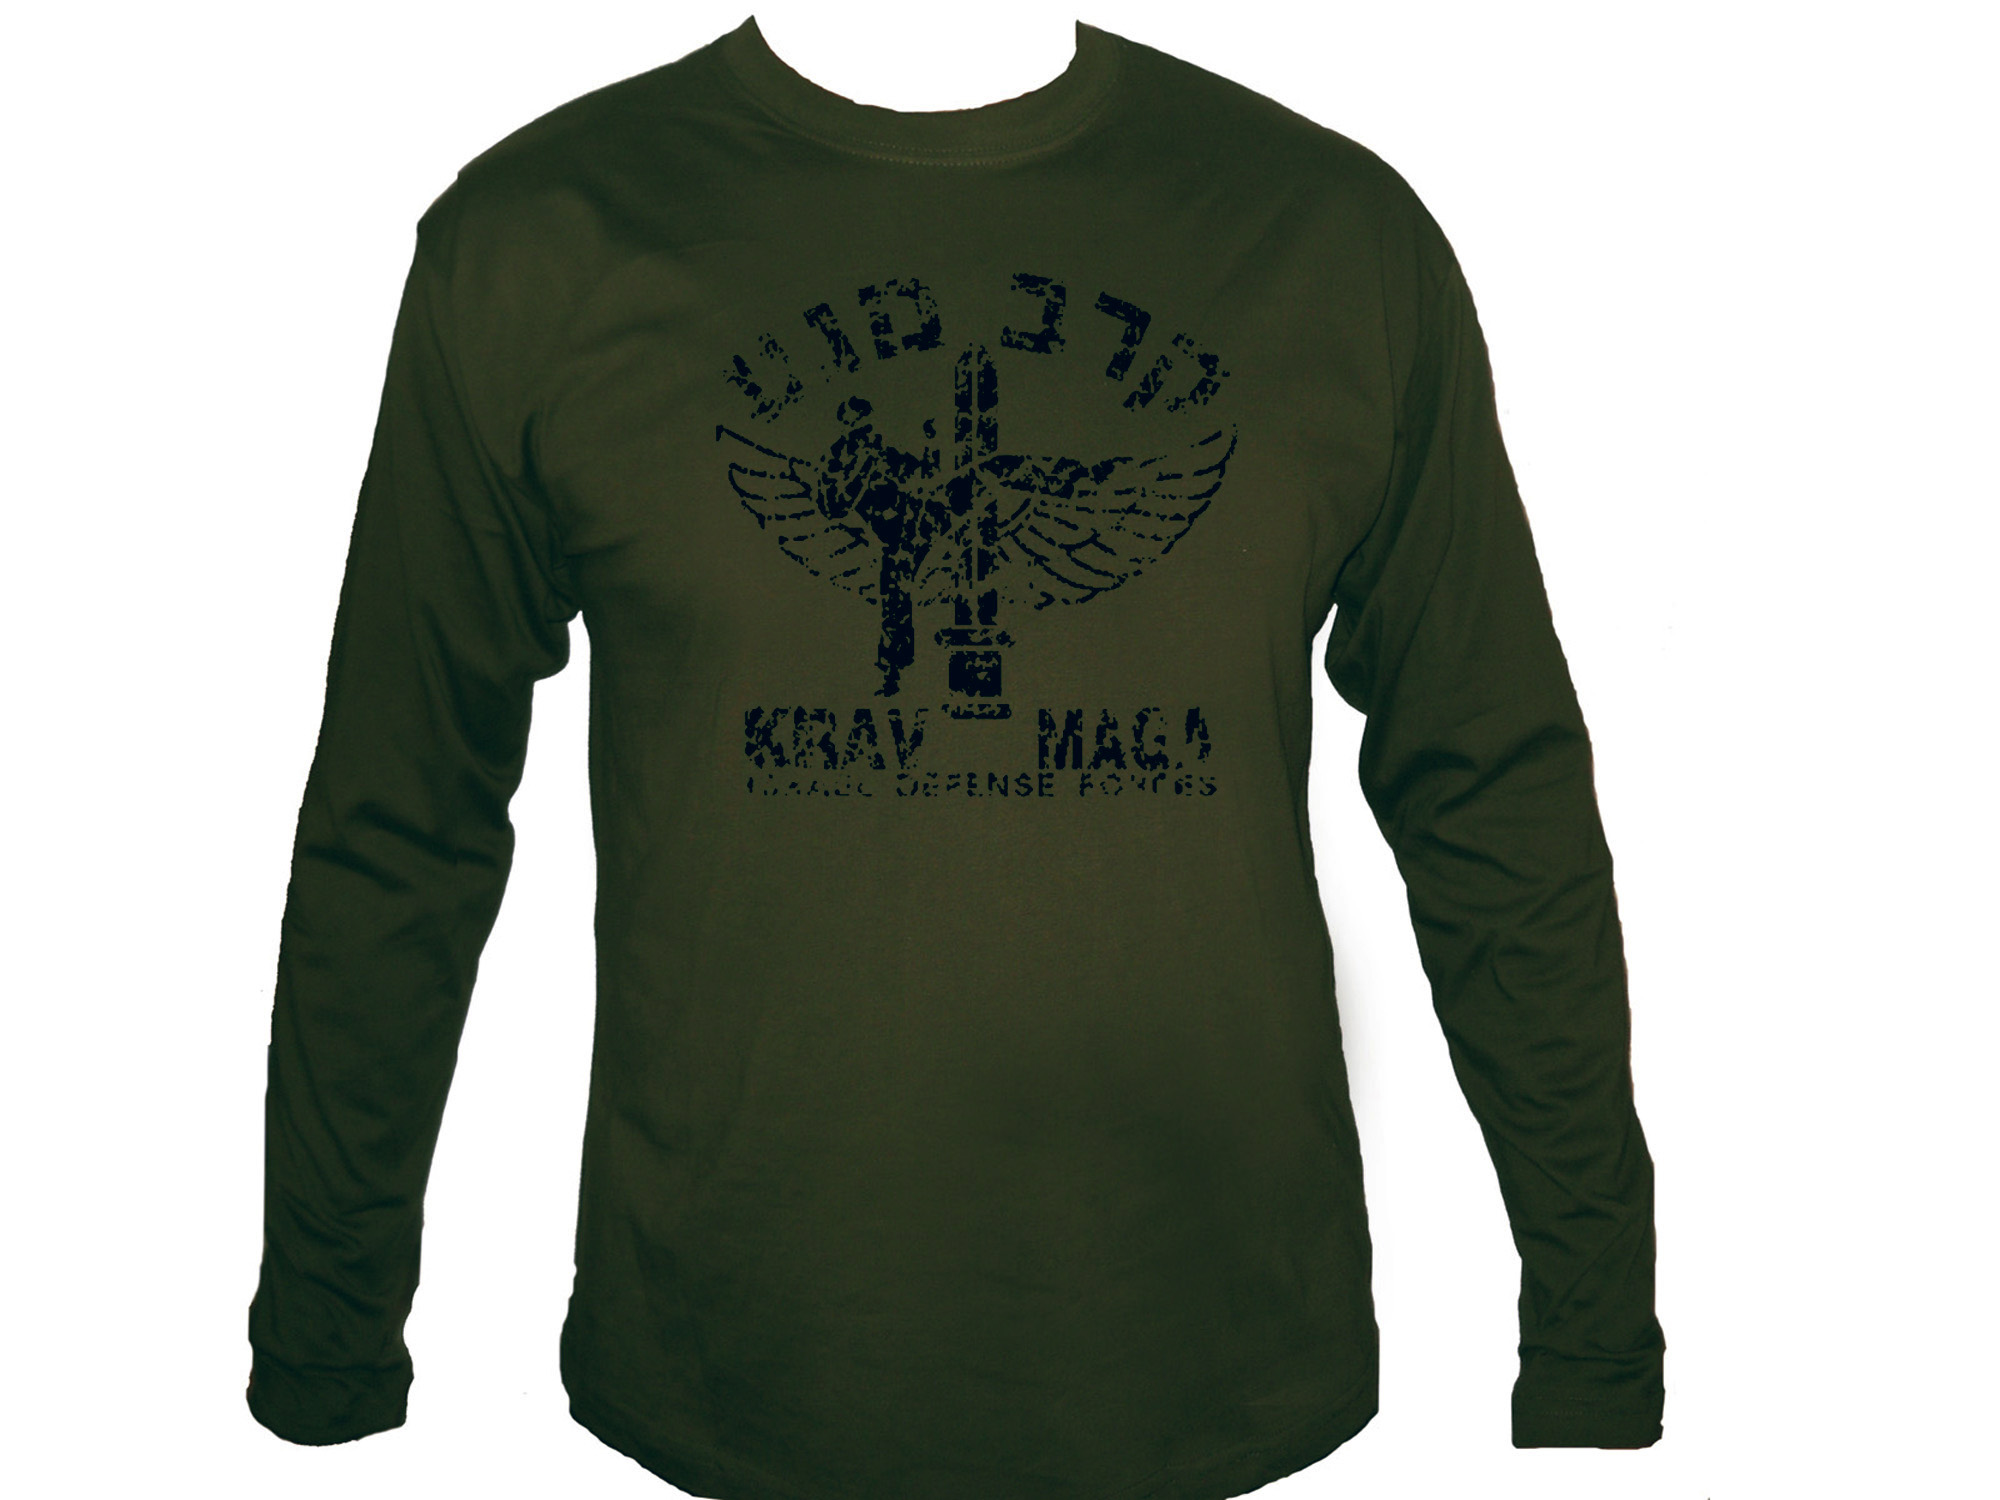 Krav maga emblem distressed look olive green sleeved t-shirt